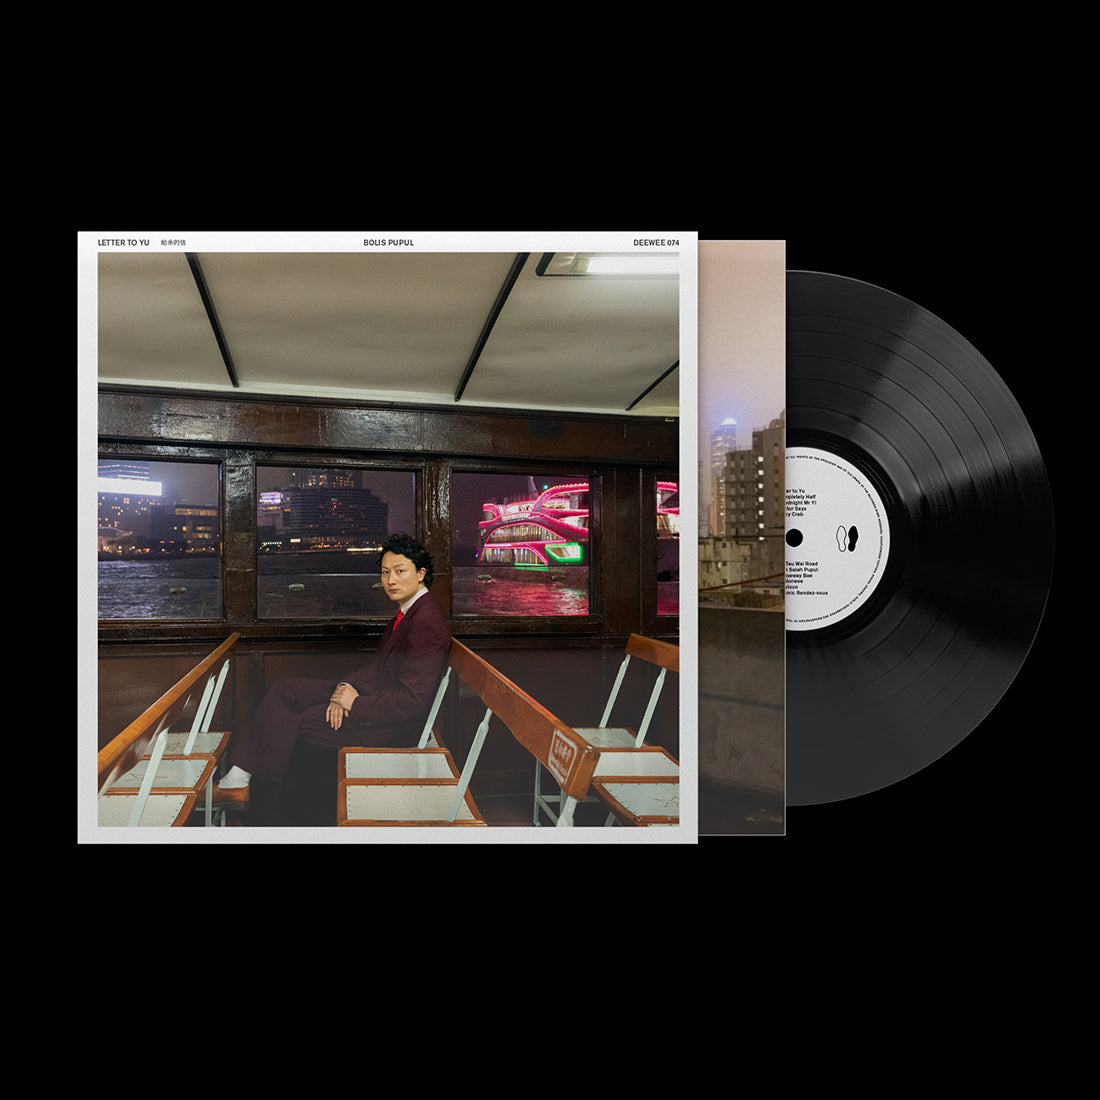 Bolis Pupul - Letter To Yu: Vinyl LP